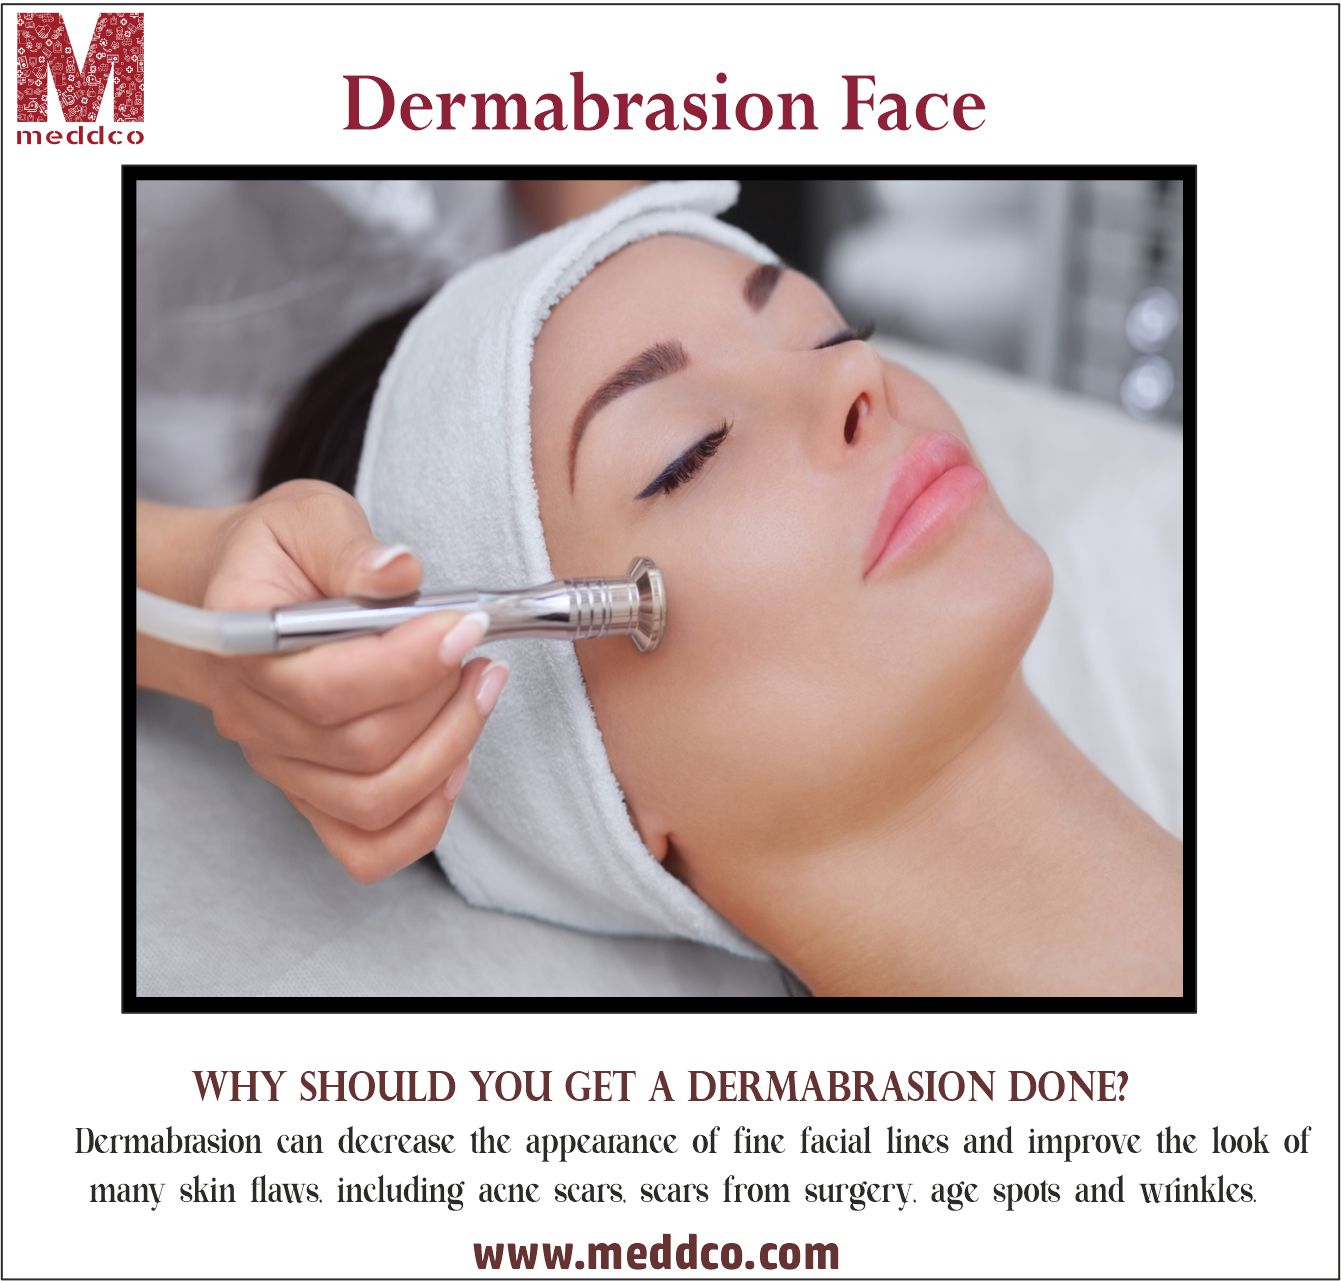 How often should you Dermabrasion your face?